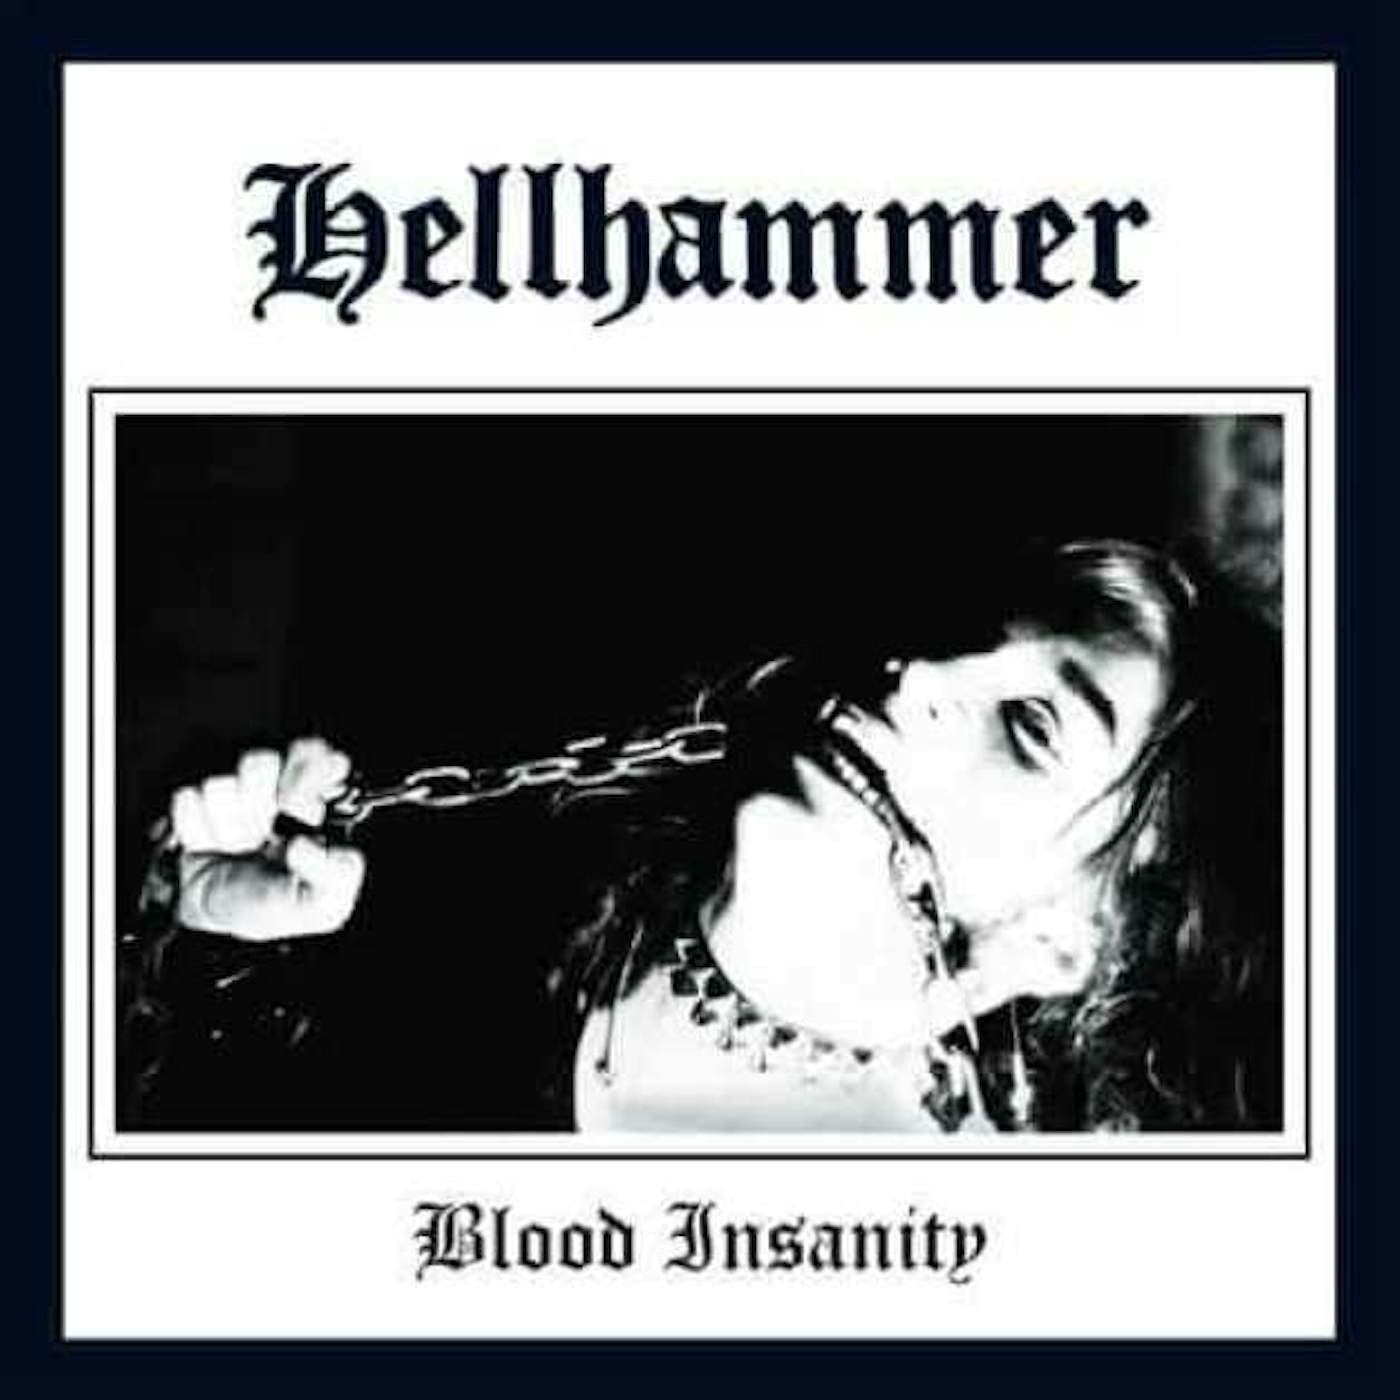 Hellhammer BLOOD INSANITY   (GER) Vinyl Record - Clear Vinyl, Gatefold Sleeve